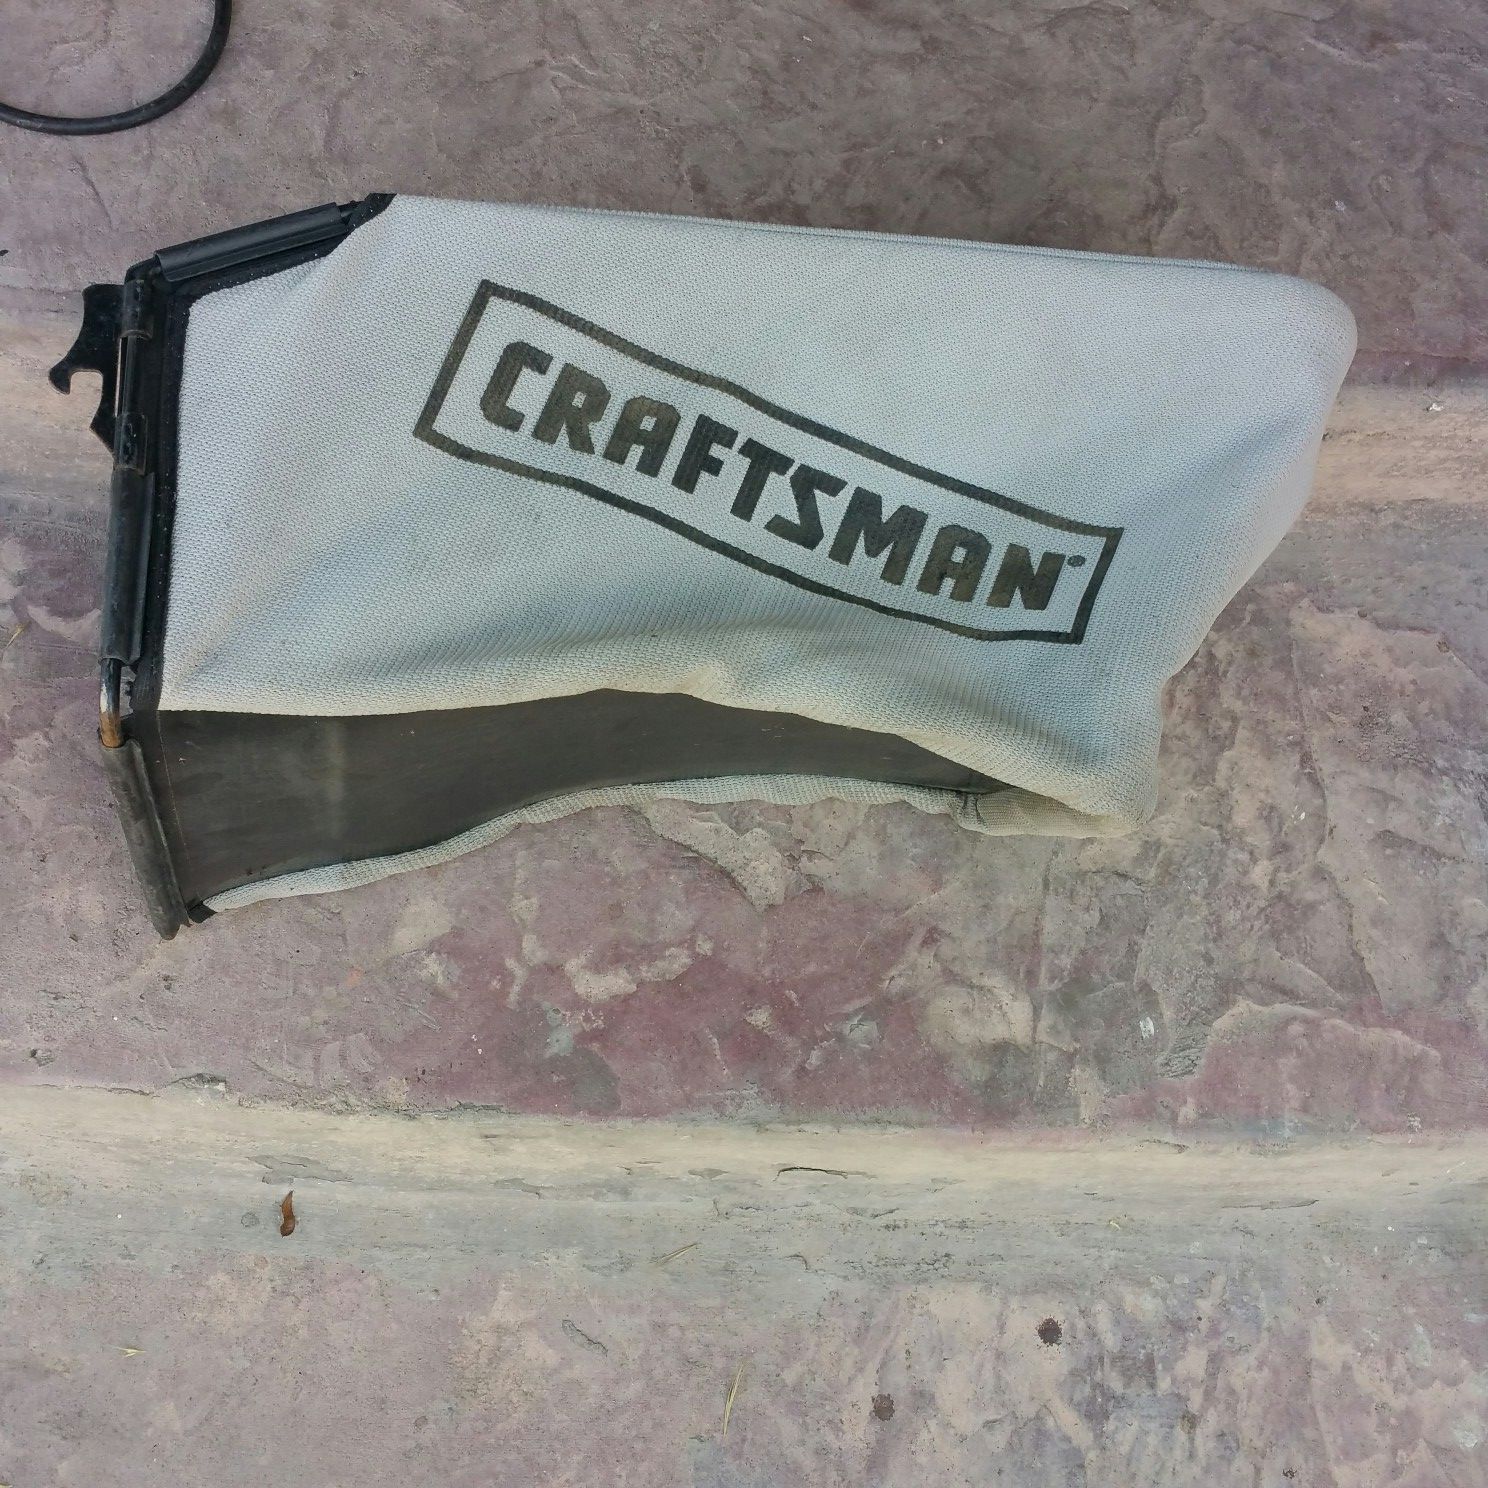 A CRAFTSMAN LAWNMOWER BAG LIKE NEW